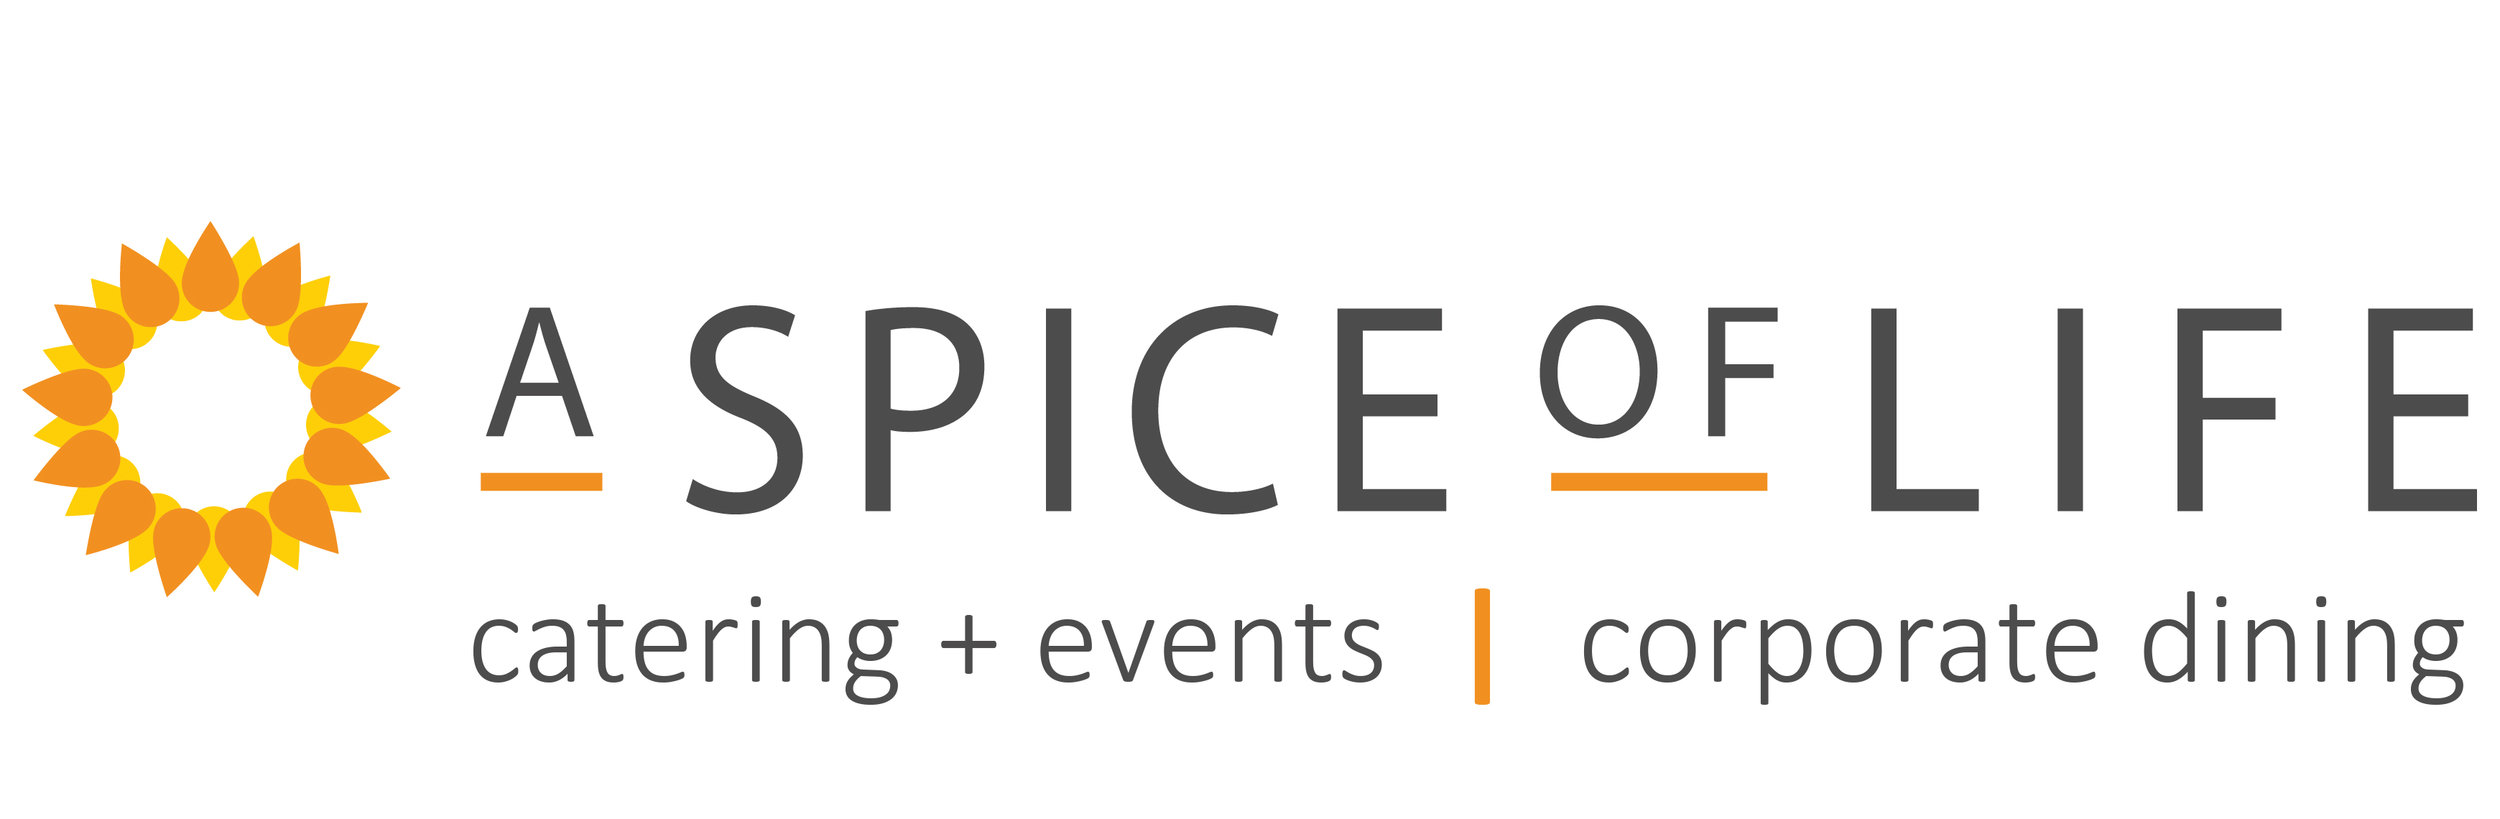 Spice of Life logo.jpg